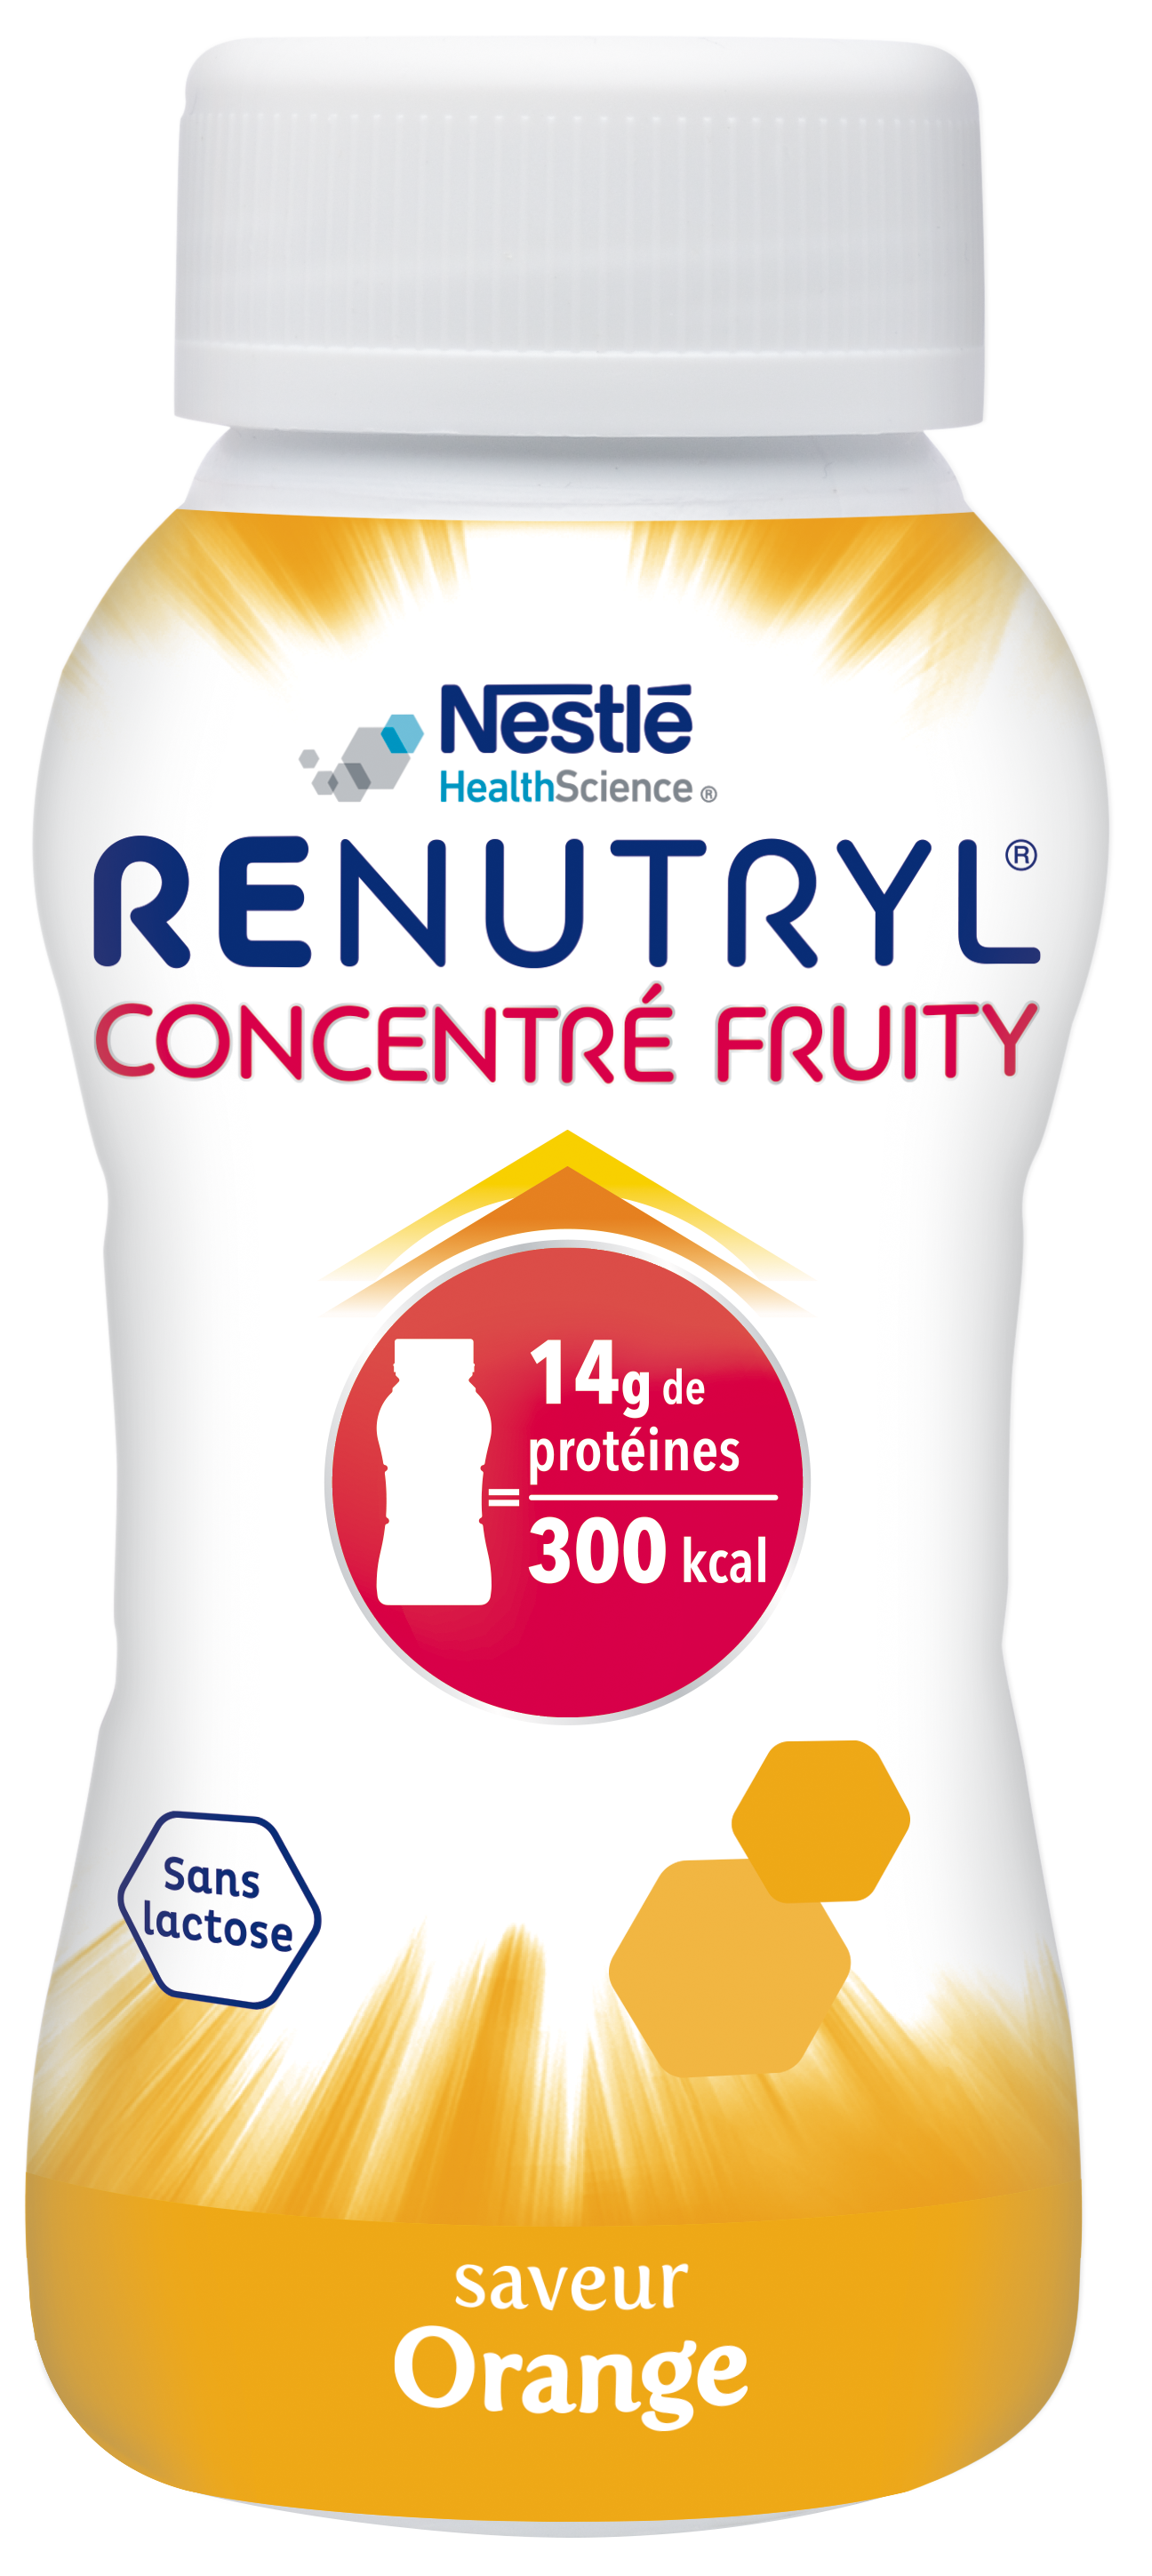 RENUTRYL CONCENTRE FRUITY | Nestlé Health Science